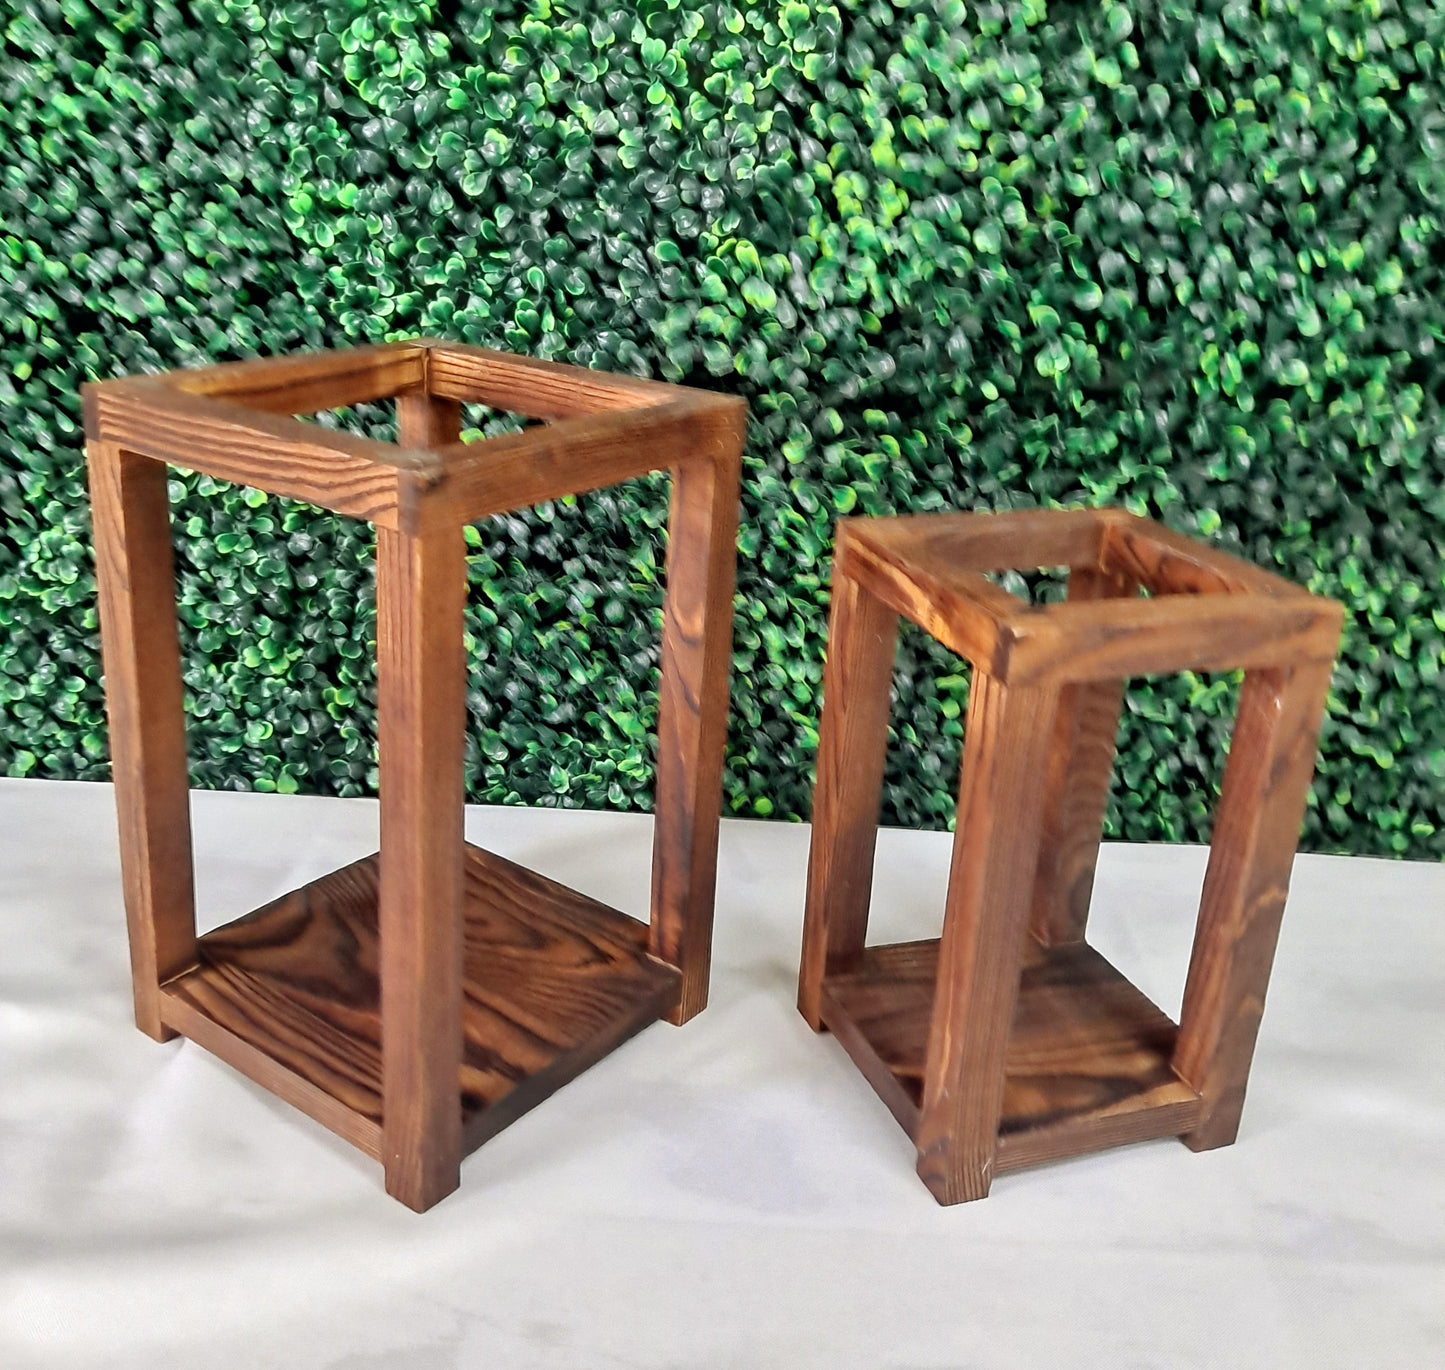 Wood frame centerpieces